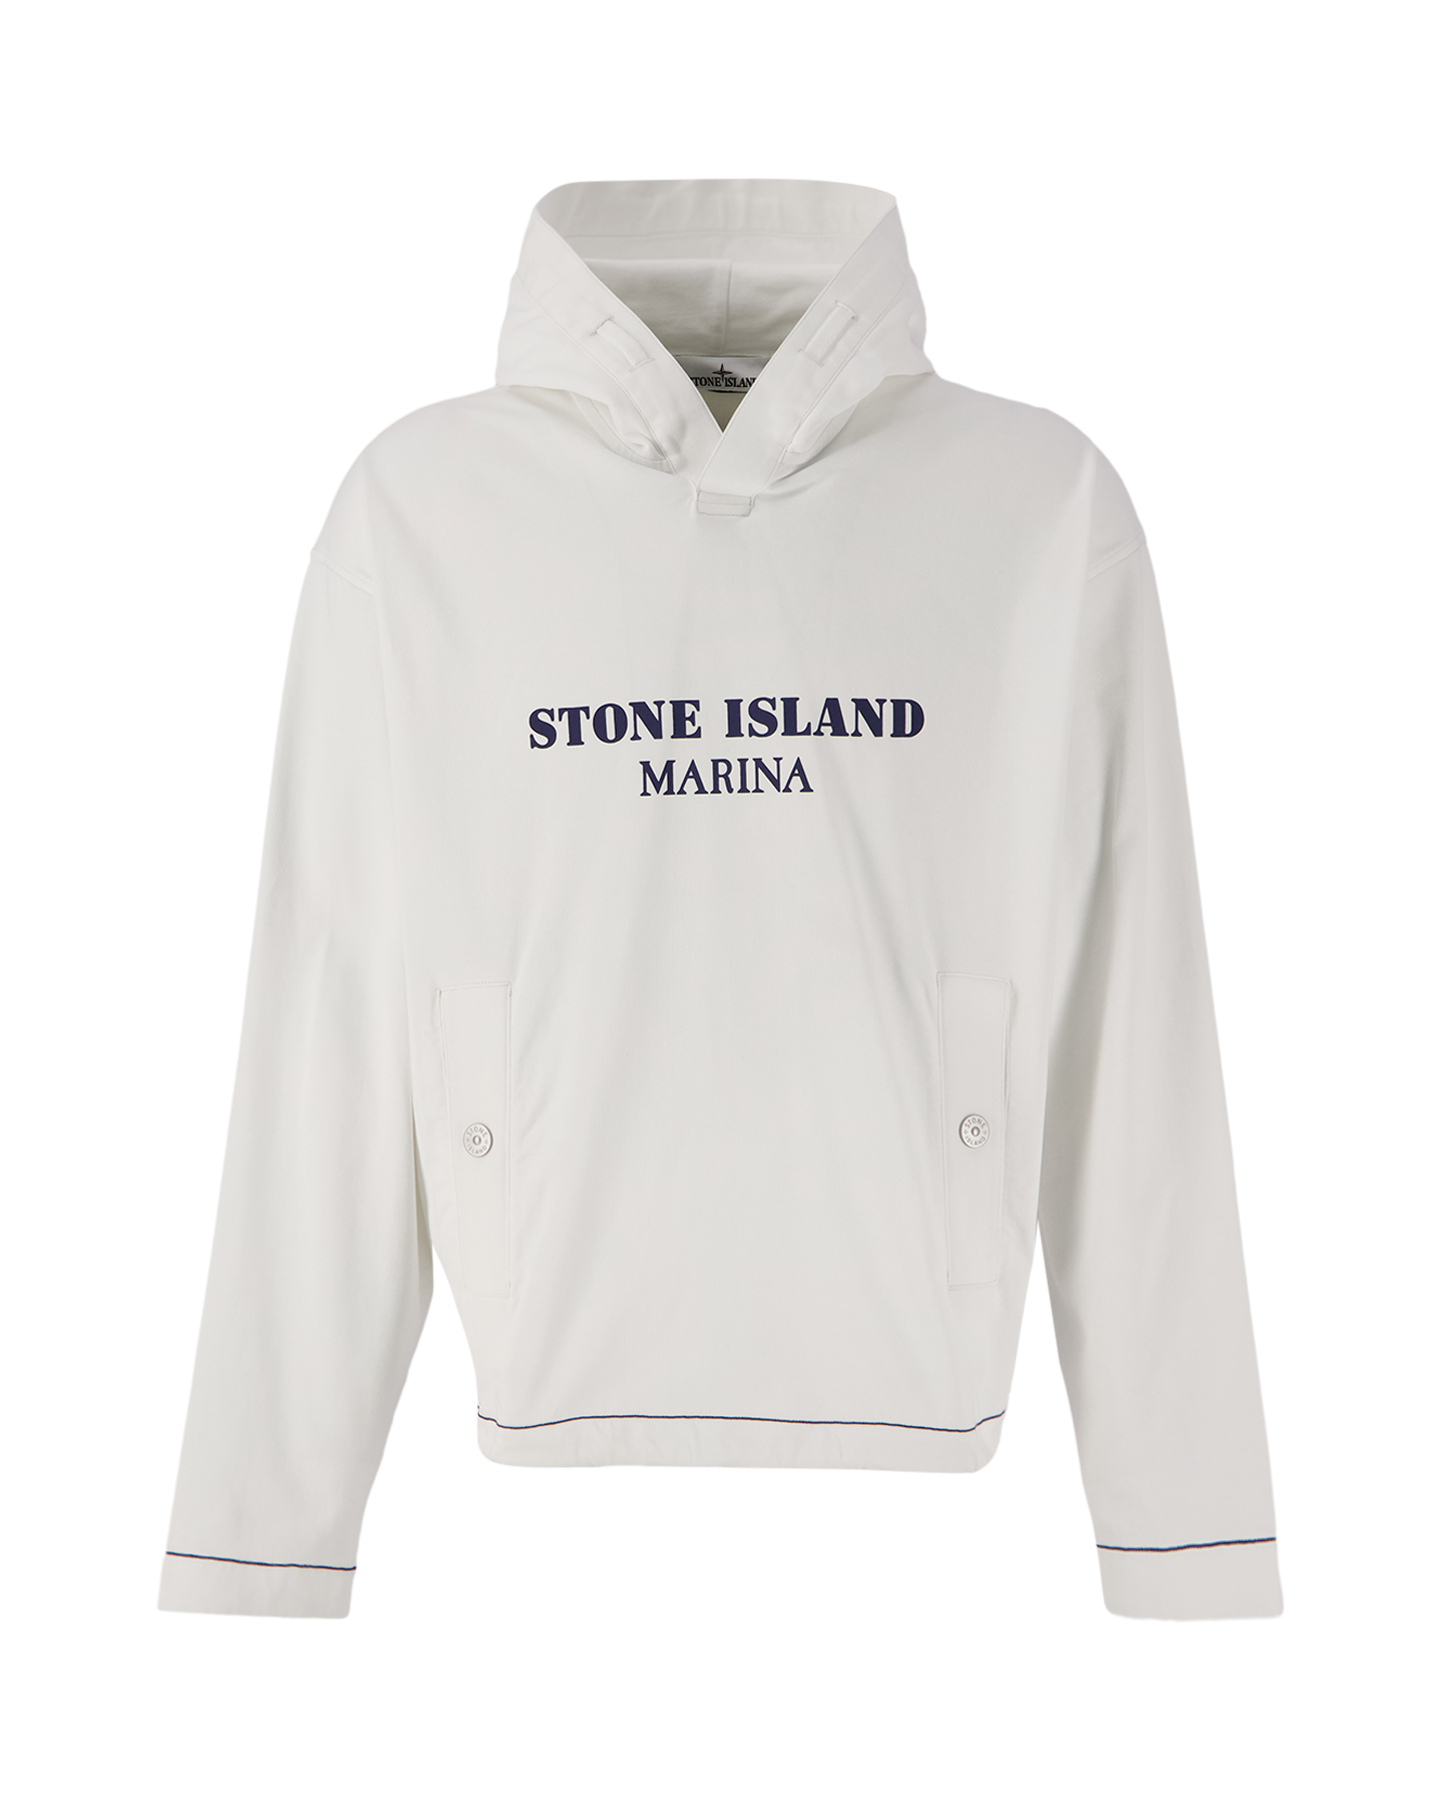 Stone Island 614X2 Stone Island Marina - Heavy Cotton Jersey Garment Dyed 'Old' Effect Hooded Sweatshirt WIT 1